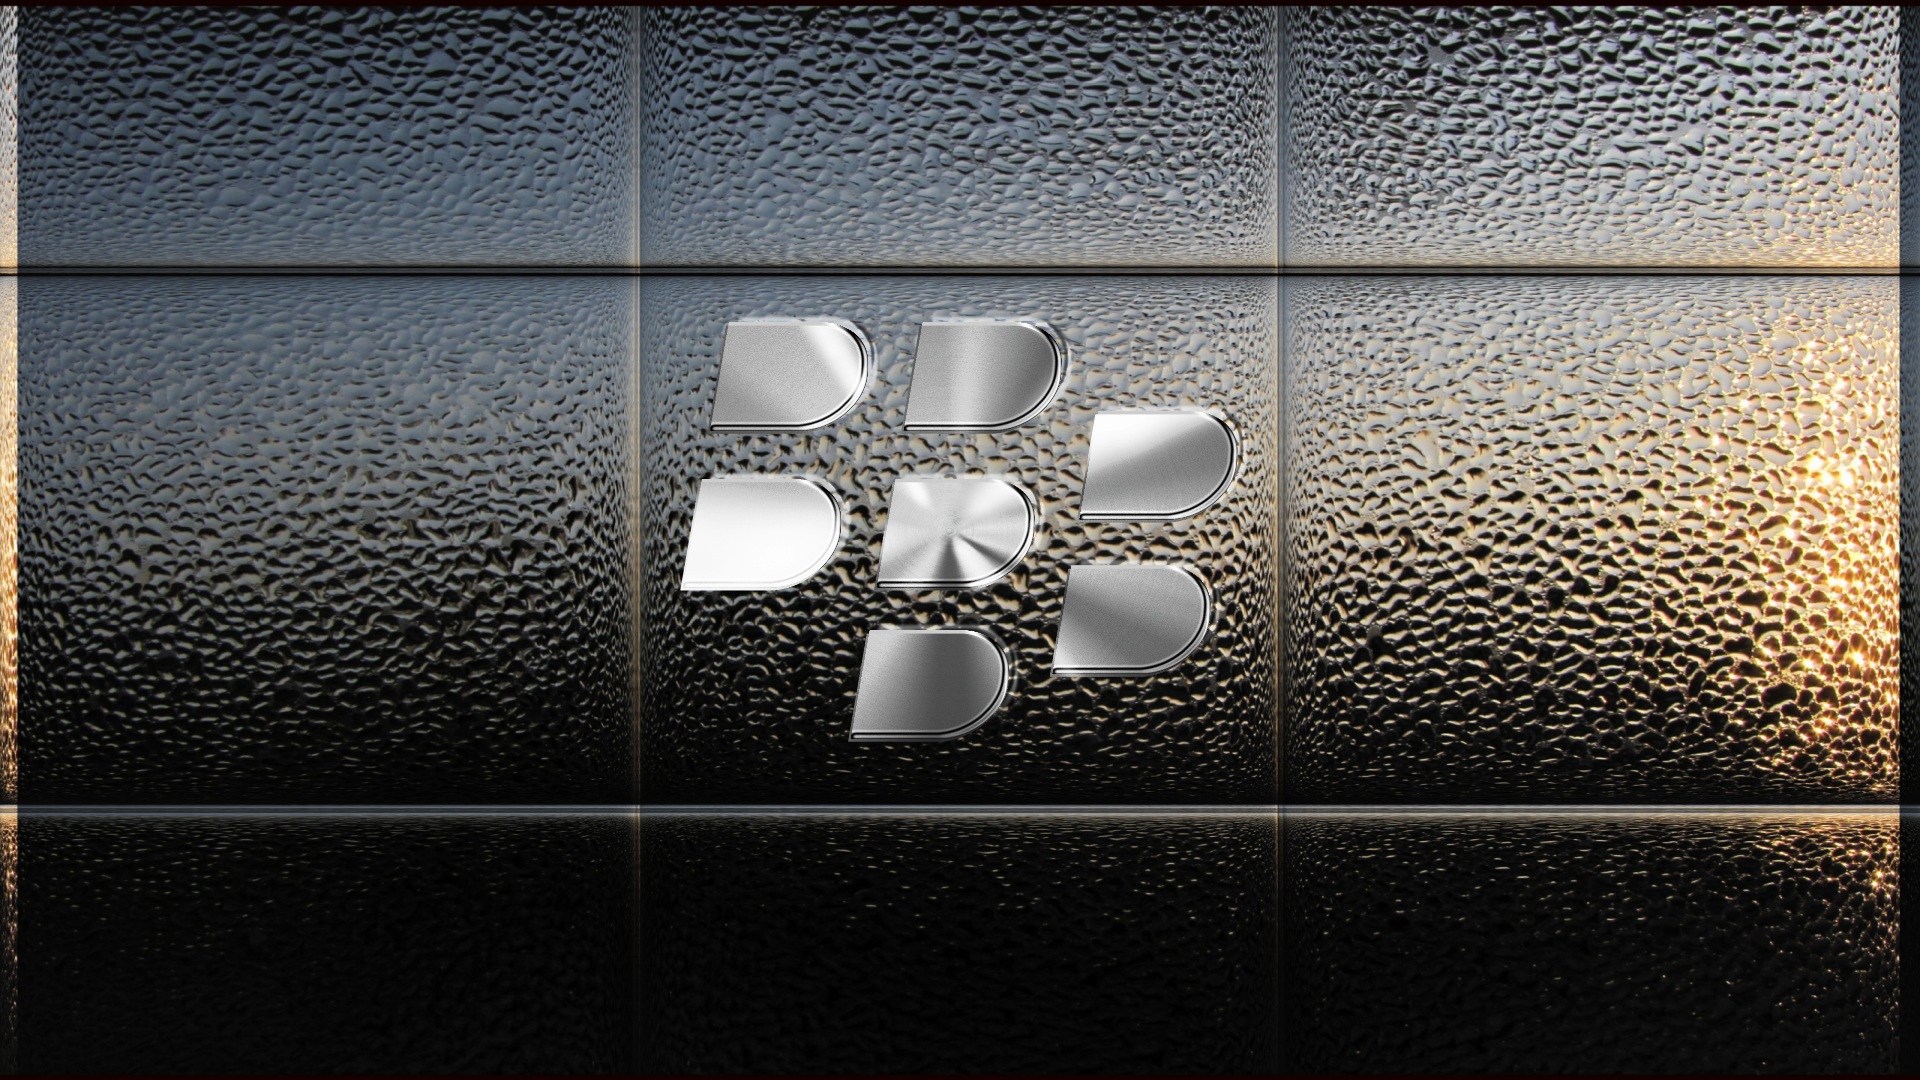 Blackberry-Logo-Pictures | Download Free Desktop Wallpaper Images ...